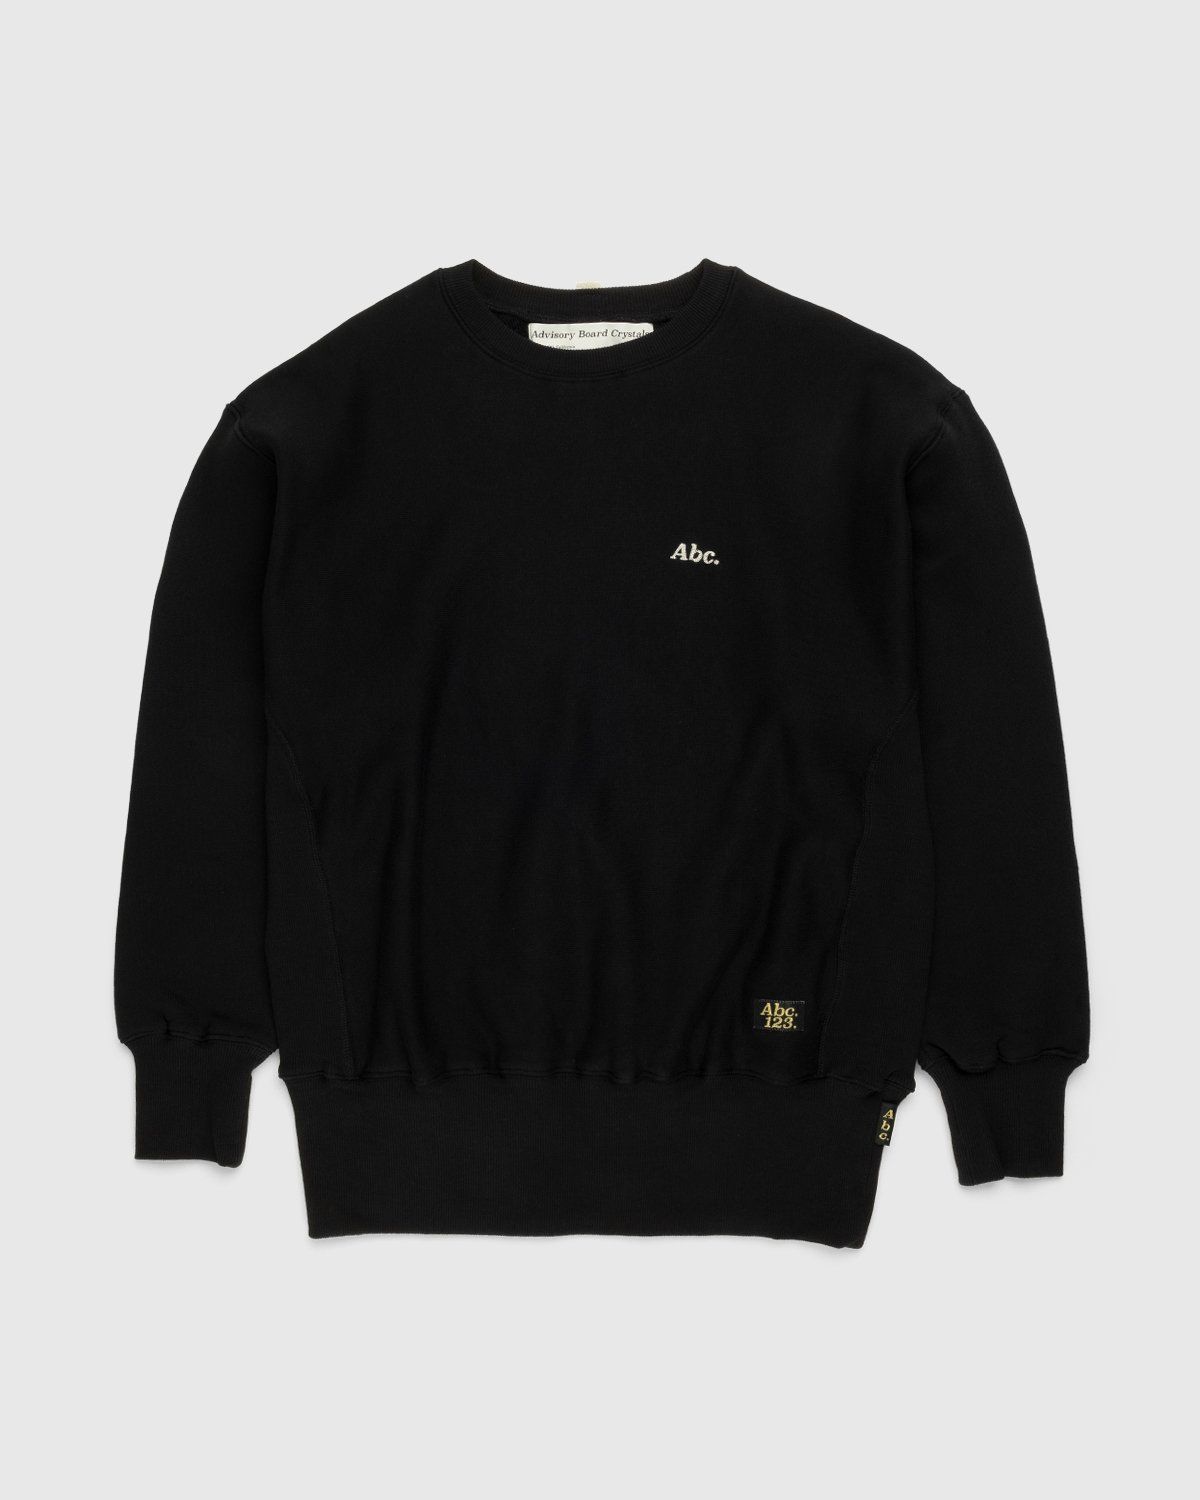 Abc. – French Terry Crewneck Sweatshirt Anthracite - Sweats - Black - Image 1